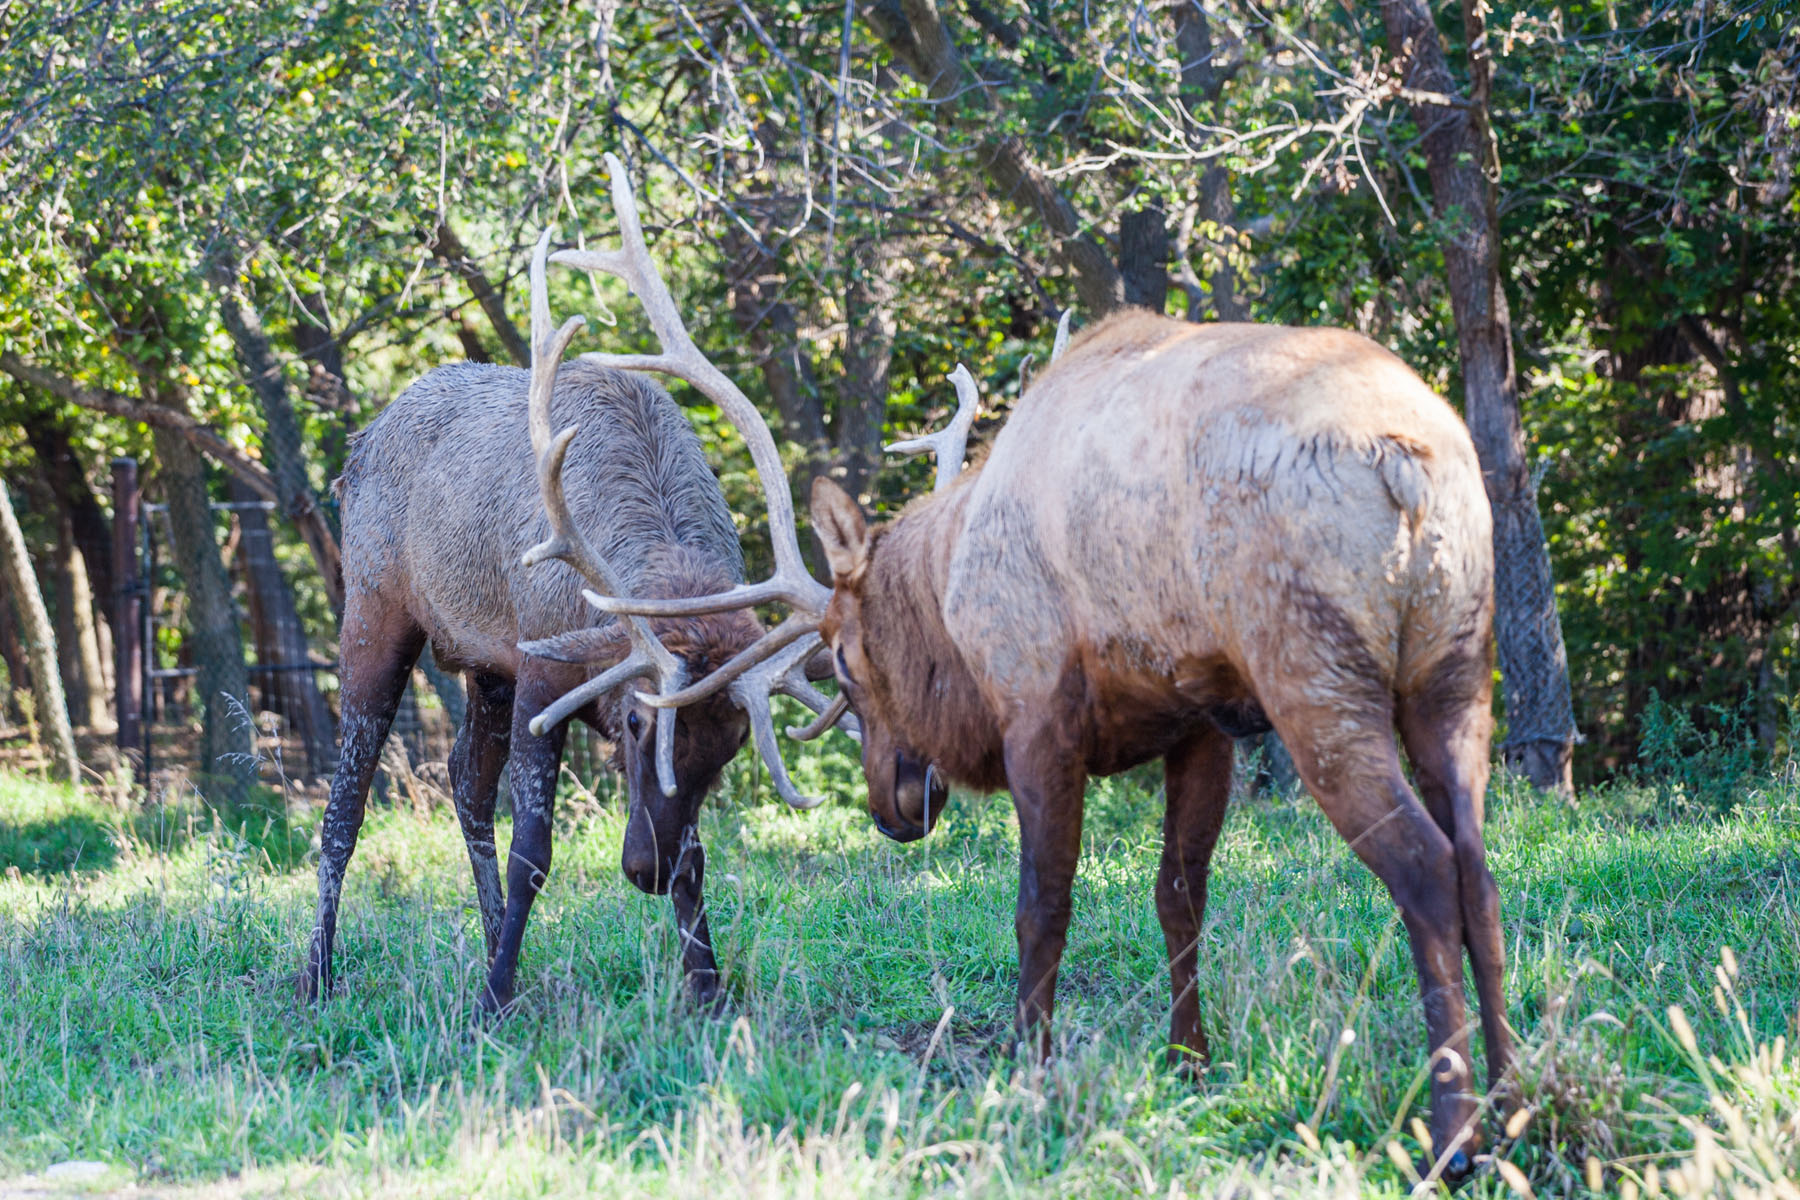 Elk sparring, Simmons Wildlife Safari, Nebraska.  Click for next photo.